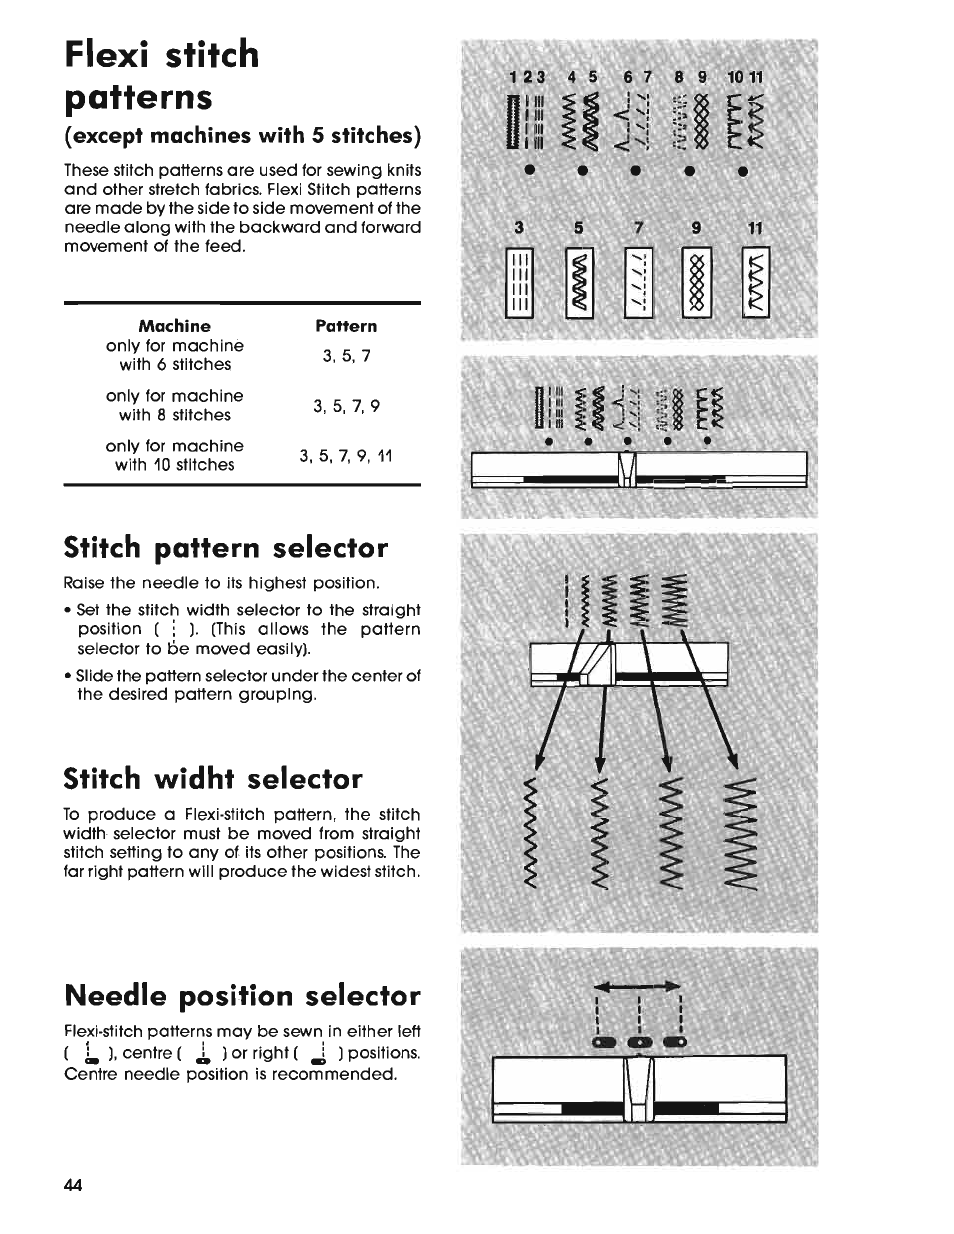 Flexi stitch patterns, Stitch pattern selector, Stitch widht selector | Needle position selector | SINGER 7025 User Manual | Page 46 / 78